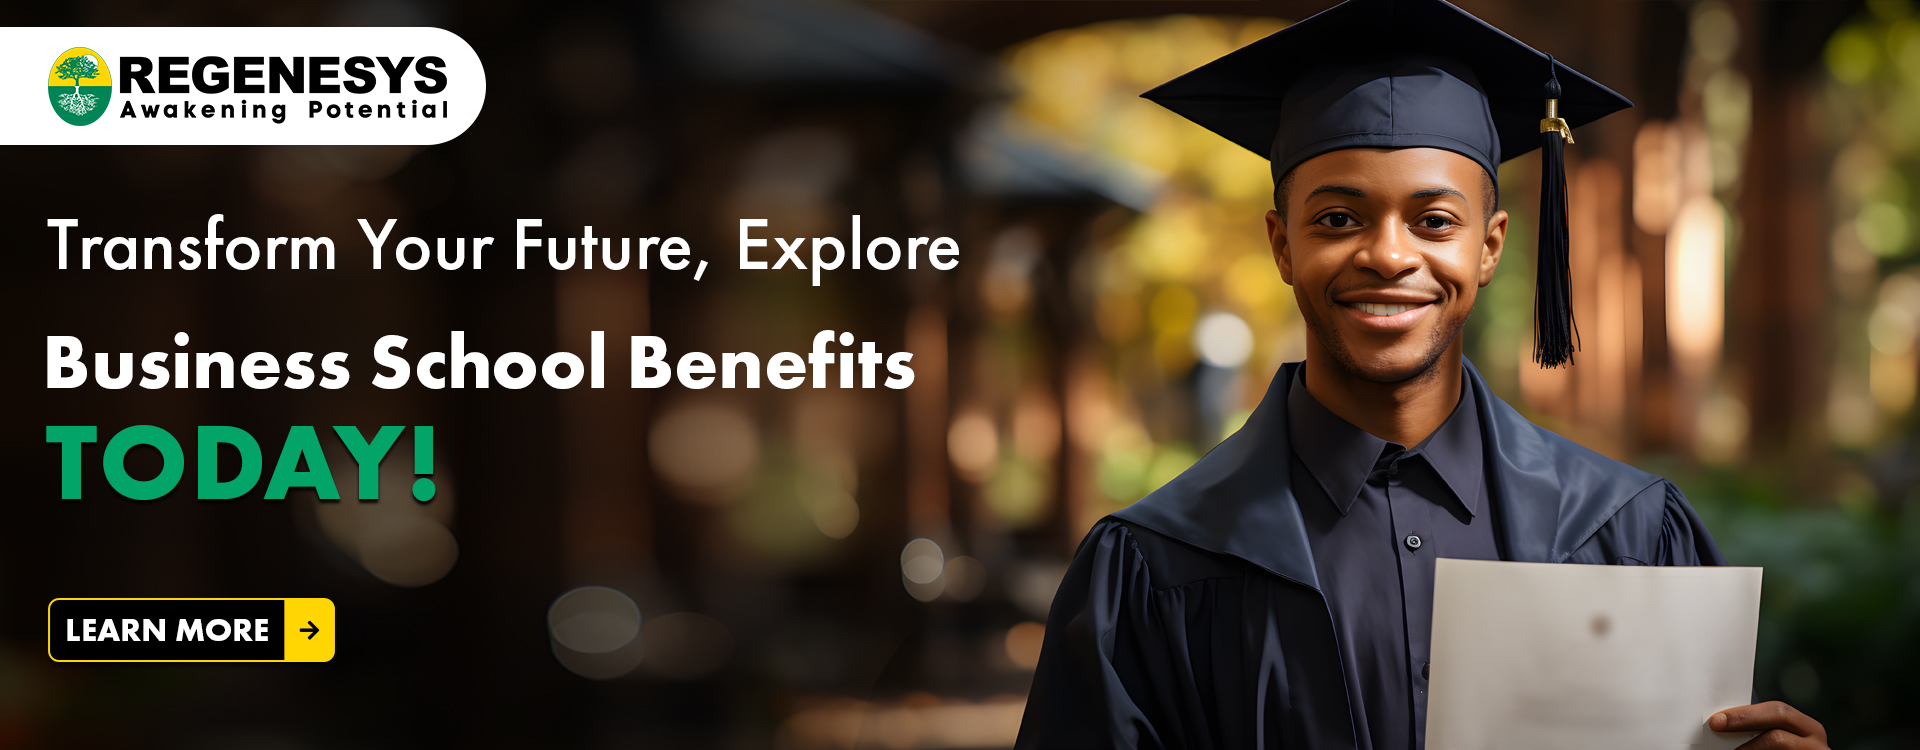 Transform Your Future, Explore Business School Benefits Today!